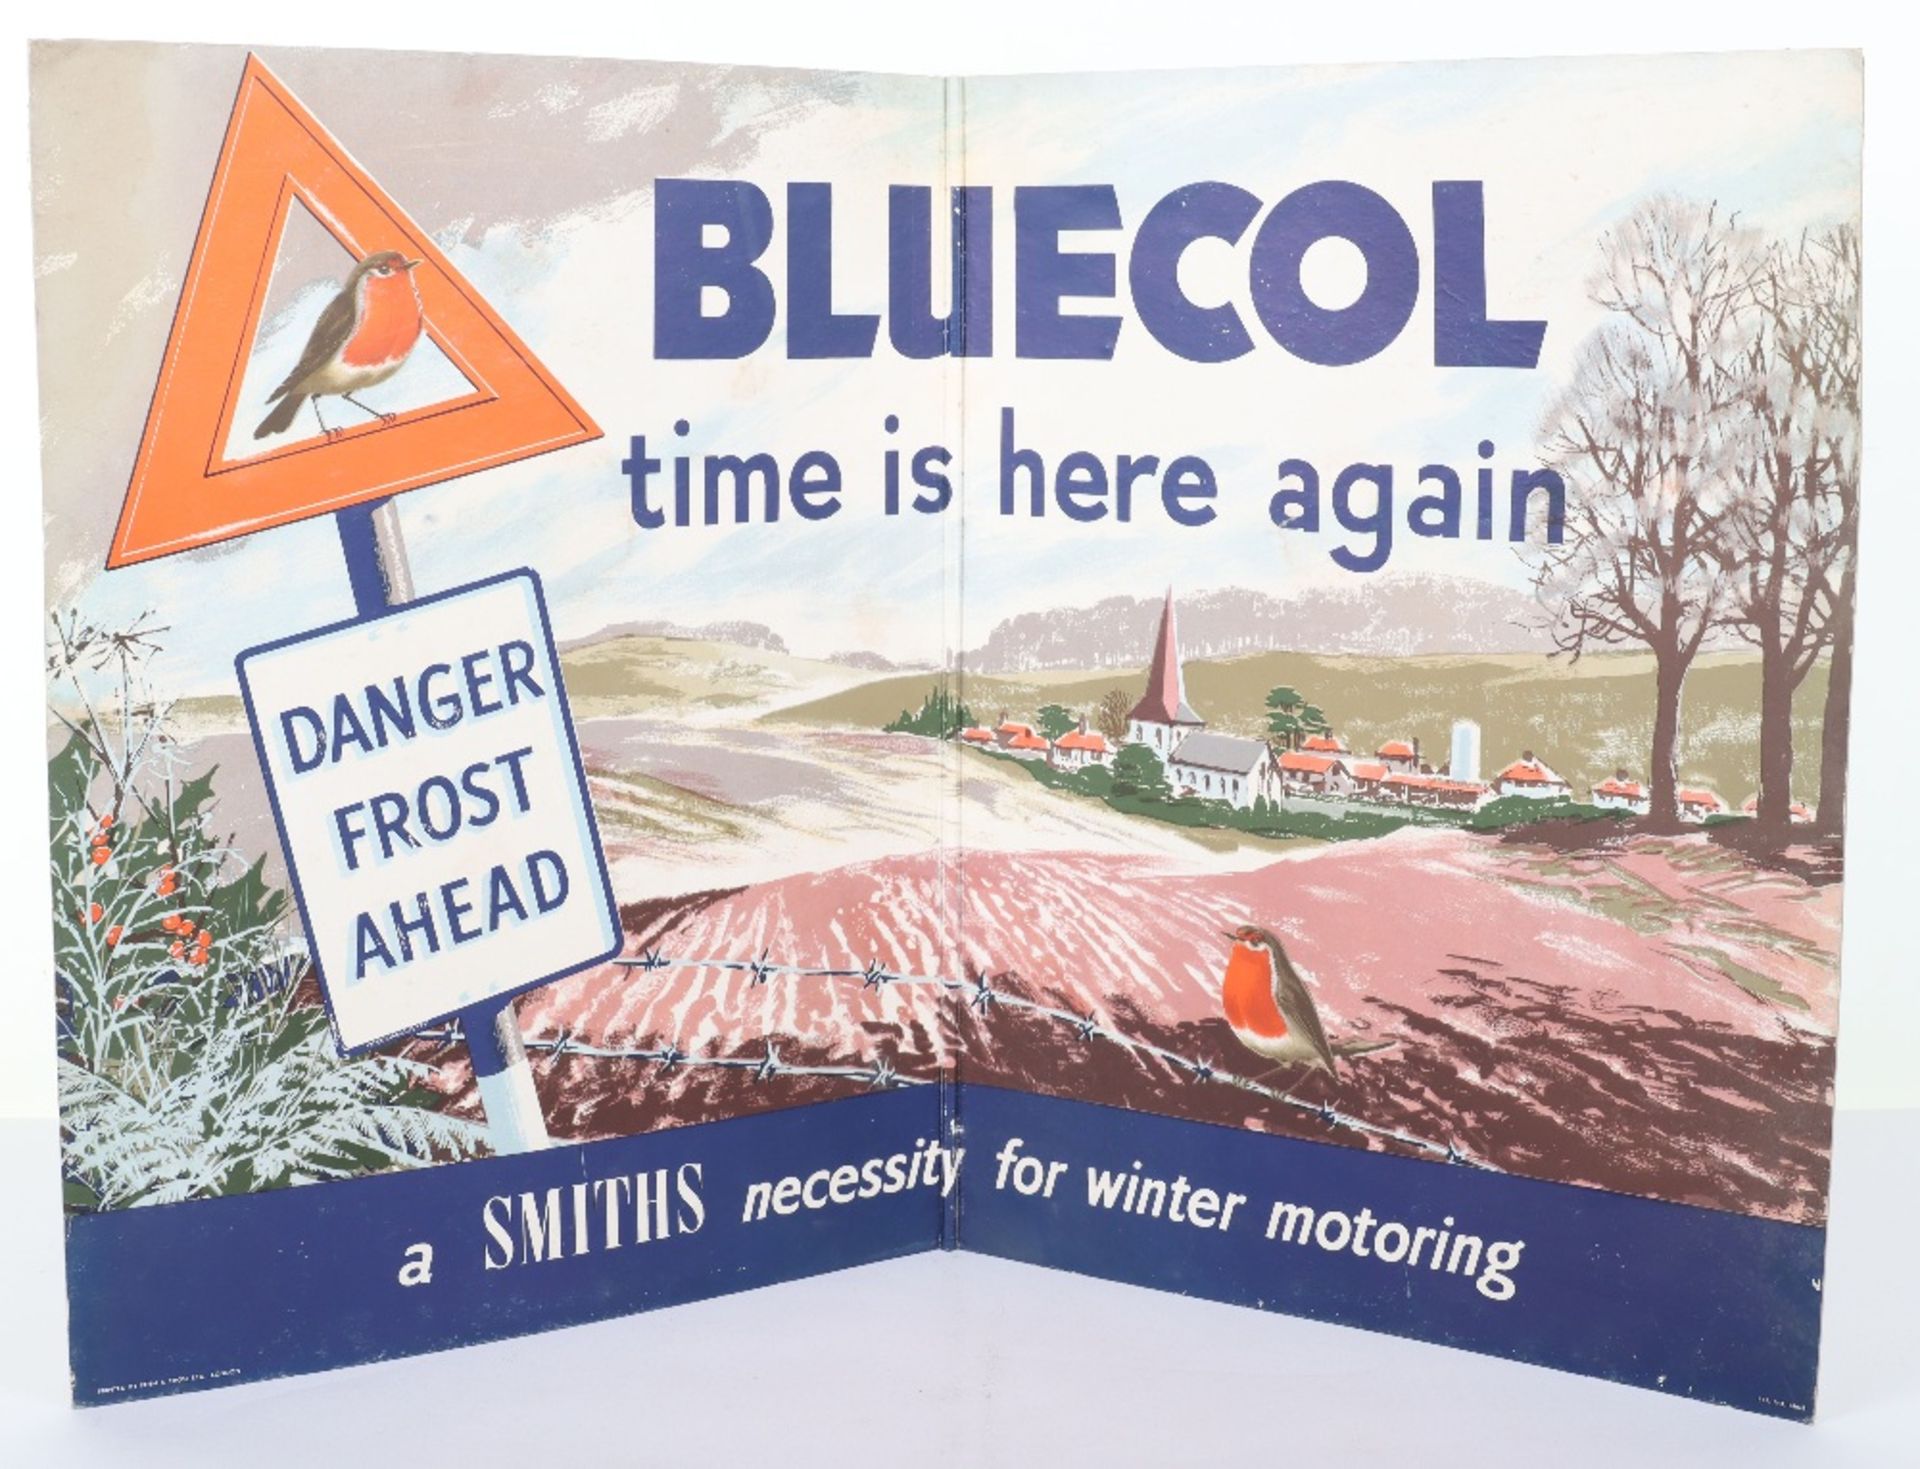 A Bluecol card advertising sign